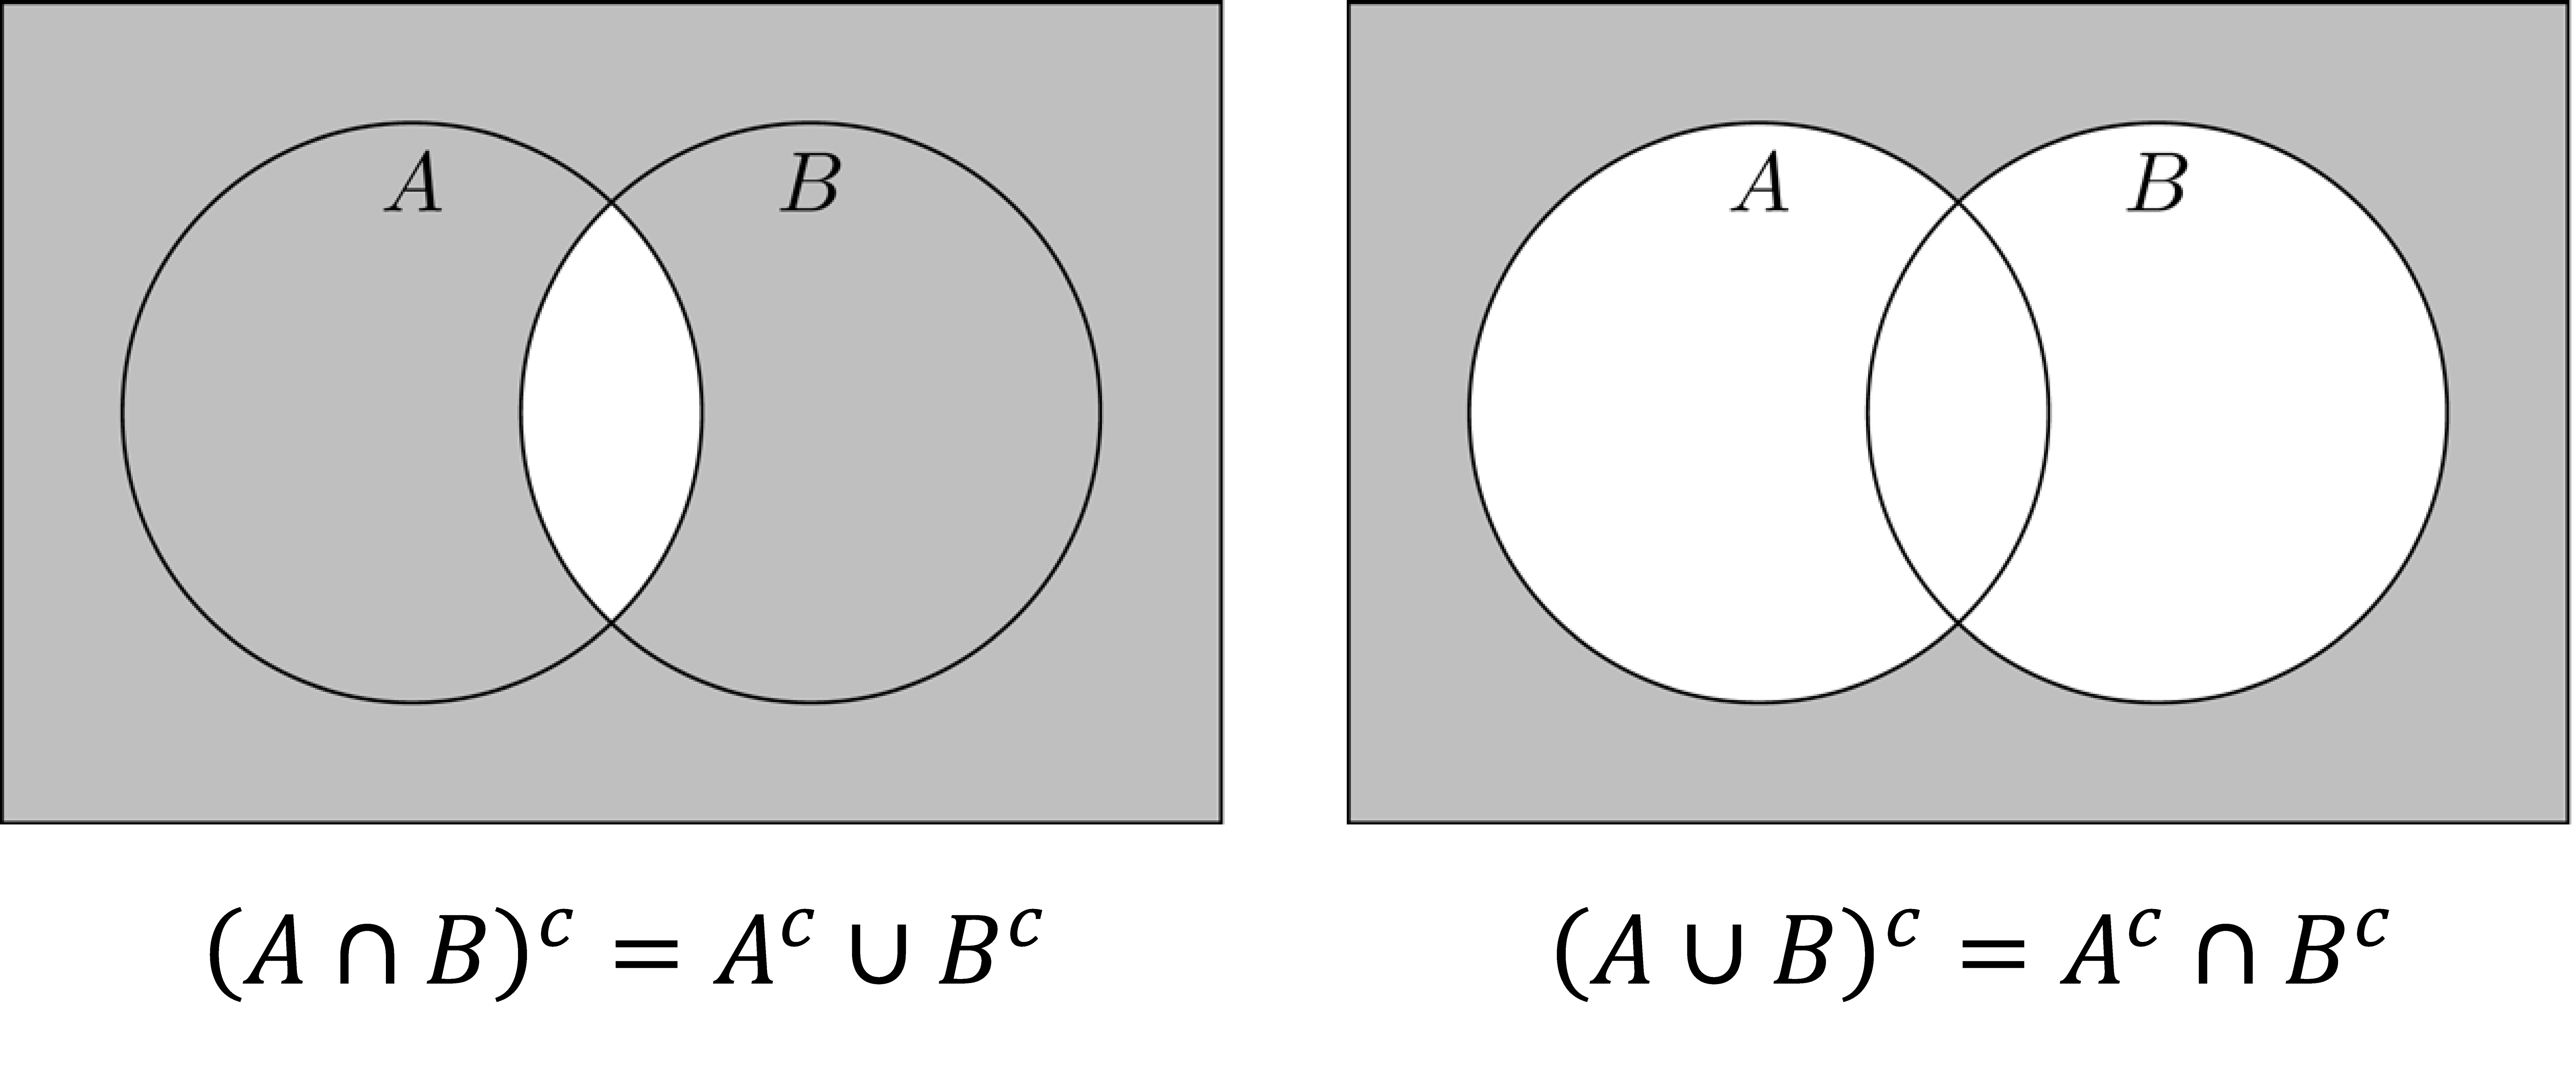 Venn diagrams for De Morgan's laws for pairs of sets